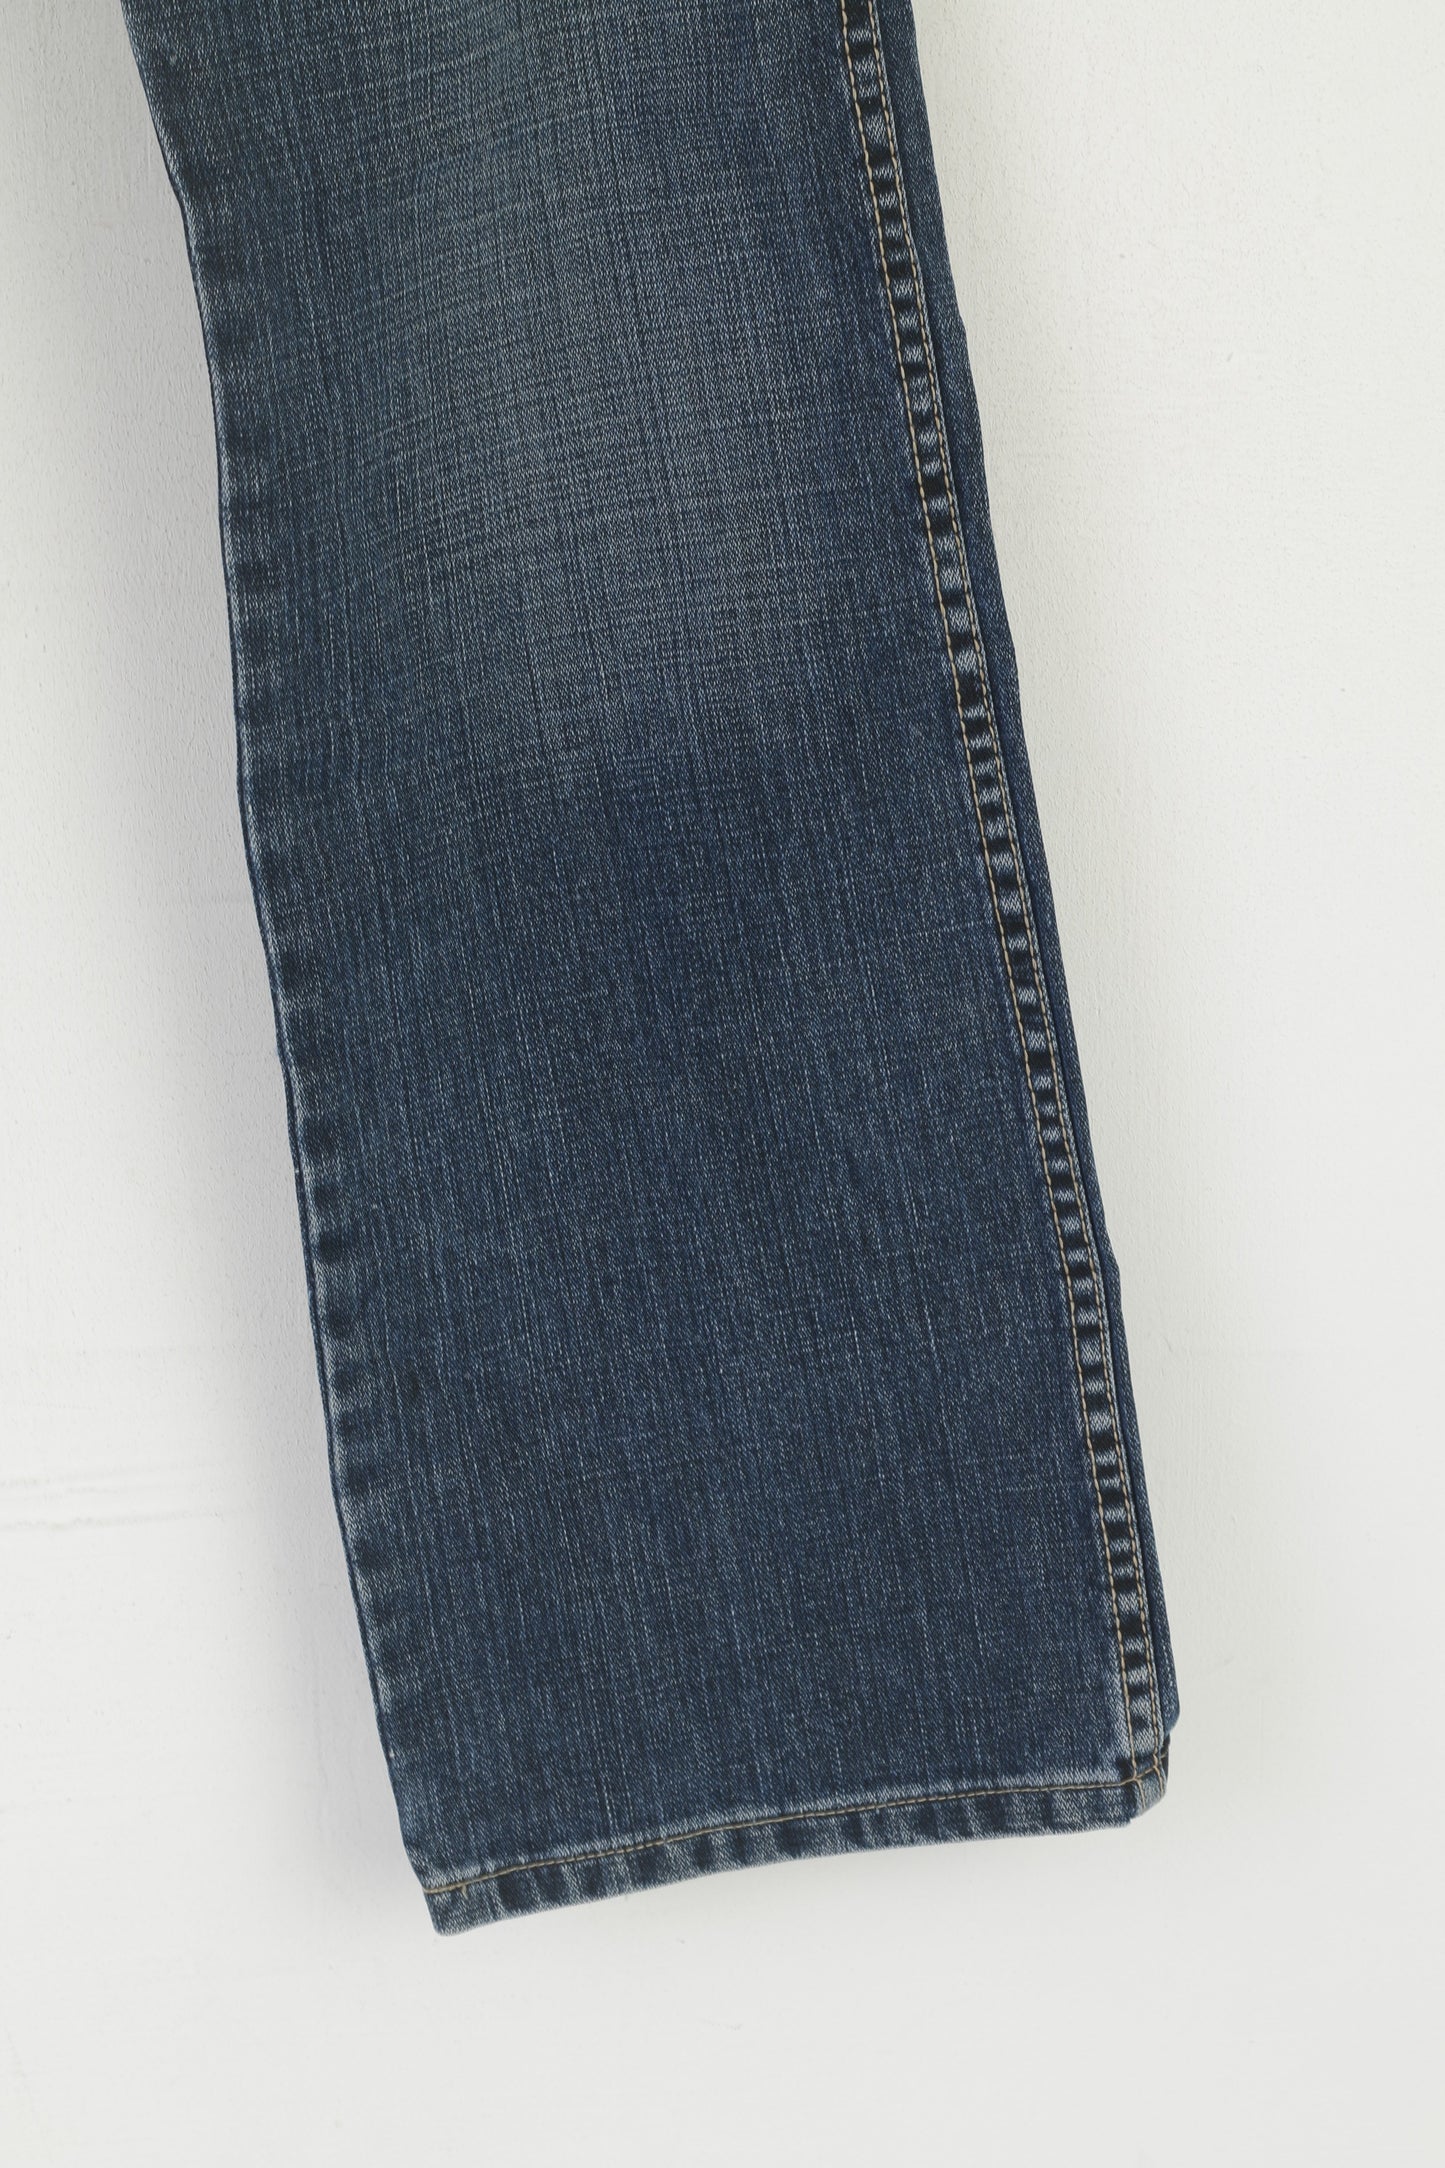 Wrangler Women 30 Jeans Trousers Navy Denim Cotton Vintage Bootcut Pants